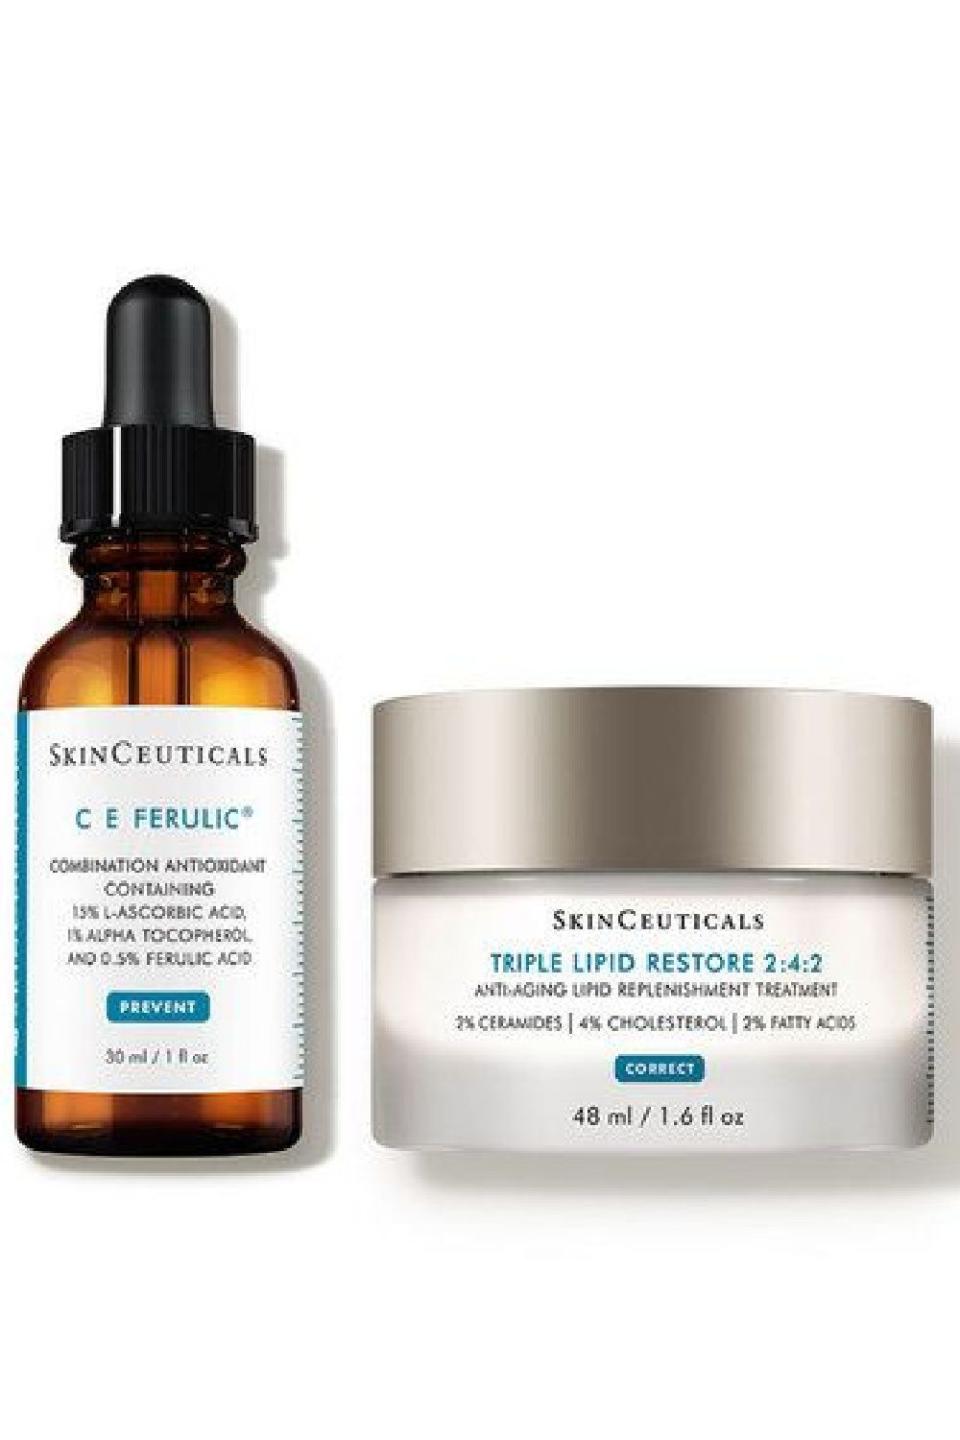 18)  SkinCeuticals Anti-Aging Radiance Duo